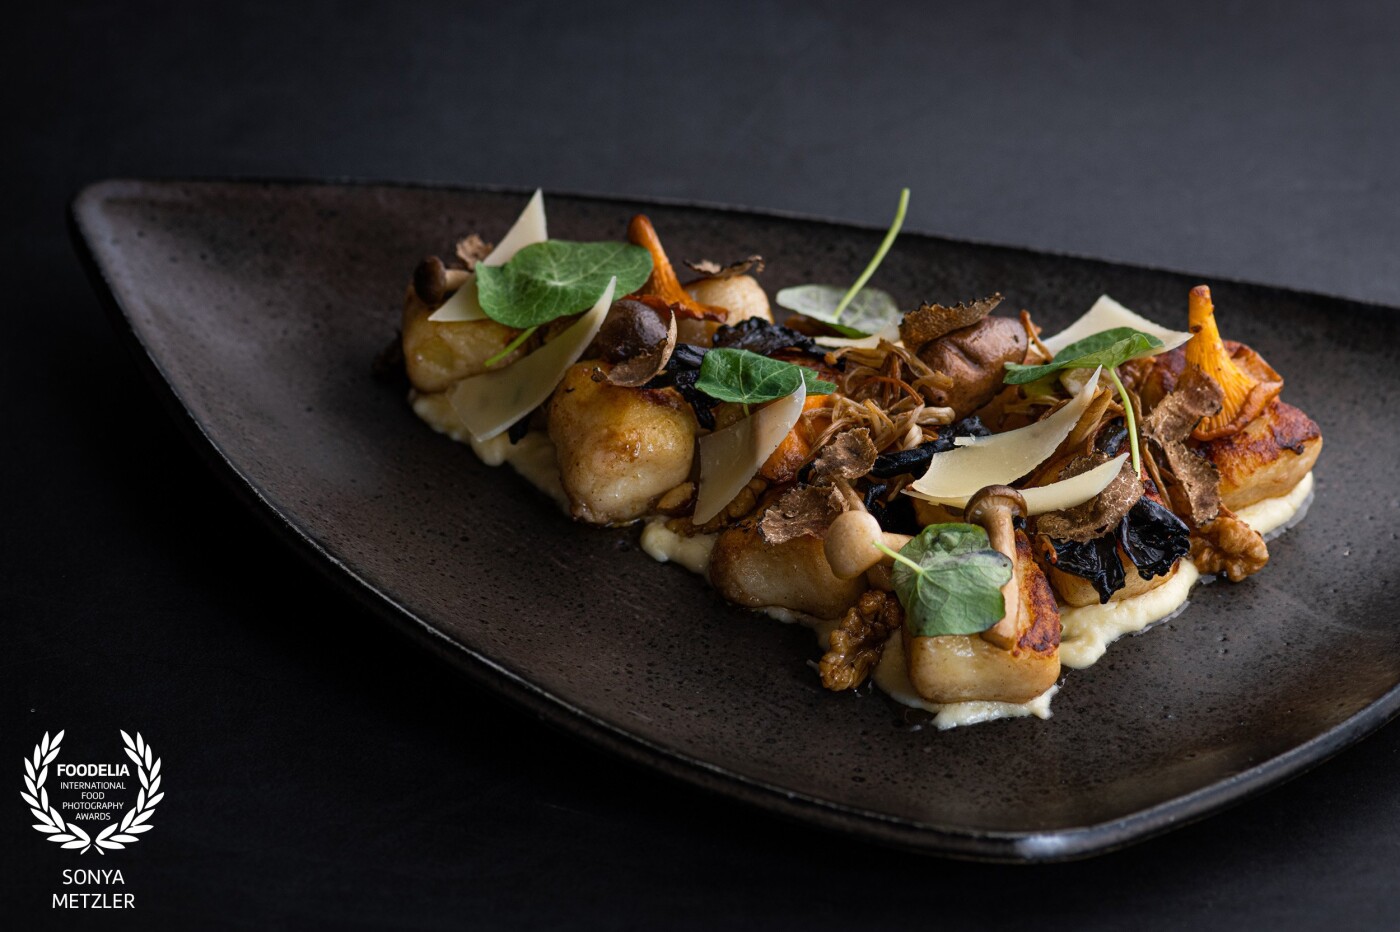 Potato Gnocchi | Parmesan Cream | Wild Mushrooms | Walnuts And Black Winter Truffles<br />
<br />
By chef @fabrimazzeo<br />
Restaurant @salut.restaurant in Islington, London